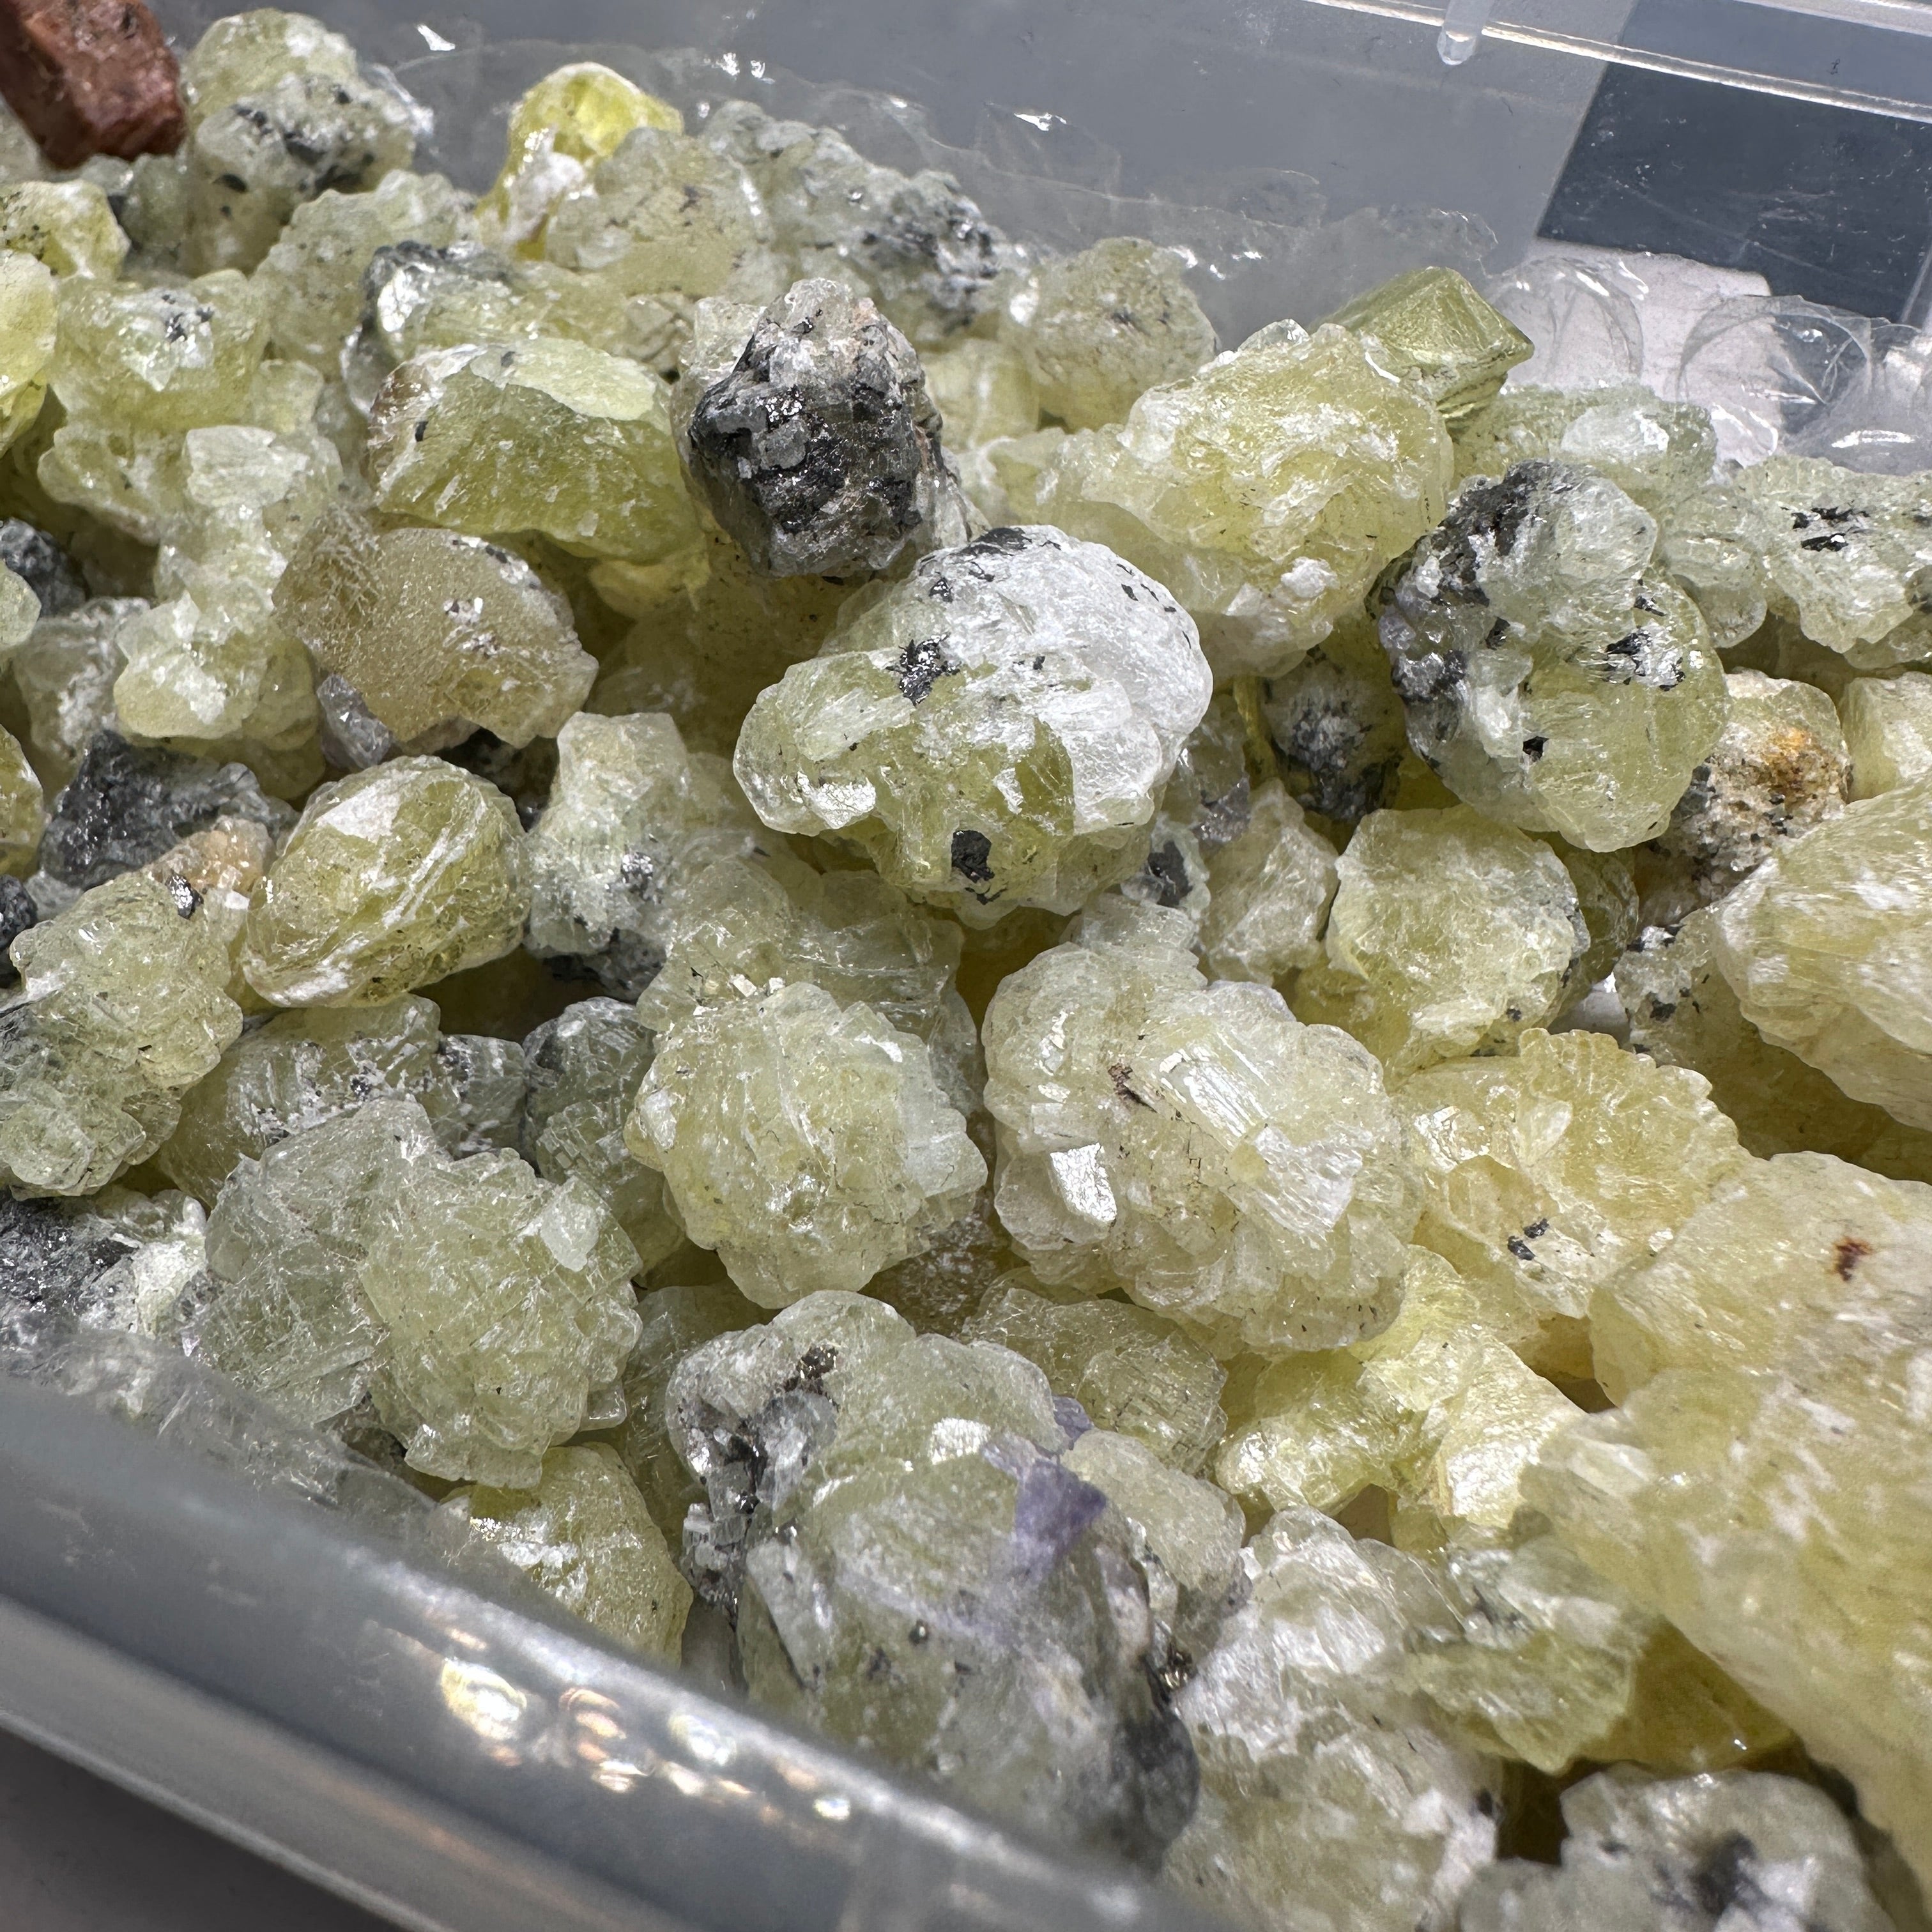 5ct-17ct PREHINITE crystals, Merelani Tanzania. Price per stone